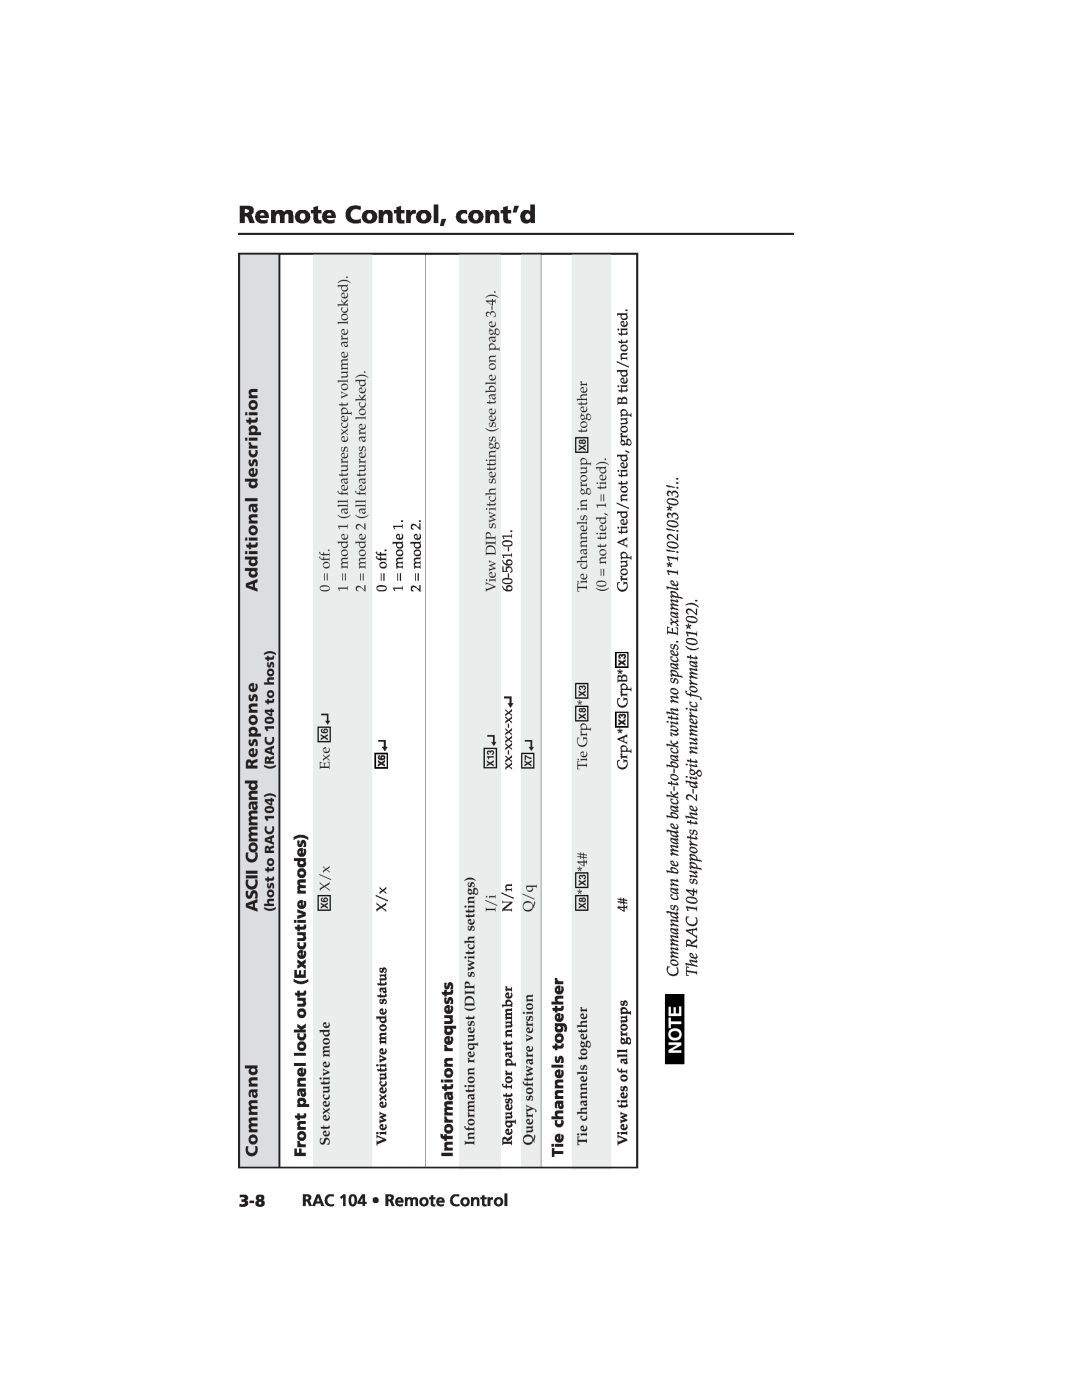 Extron electronic 3-8RAC 104 Remote Control, ASCII Command Response, Remote Control, cont’d, Additional description 